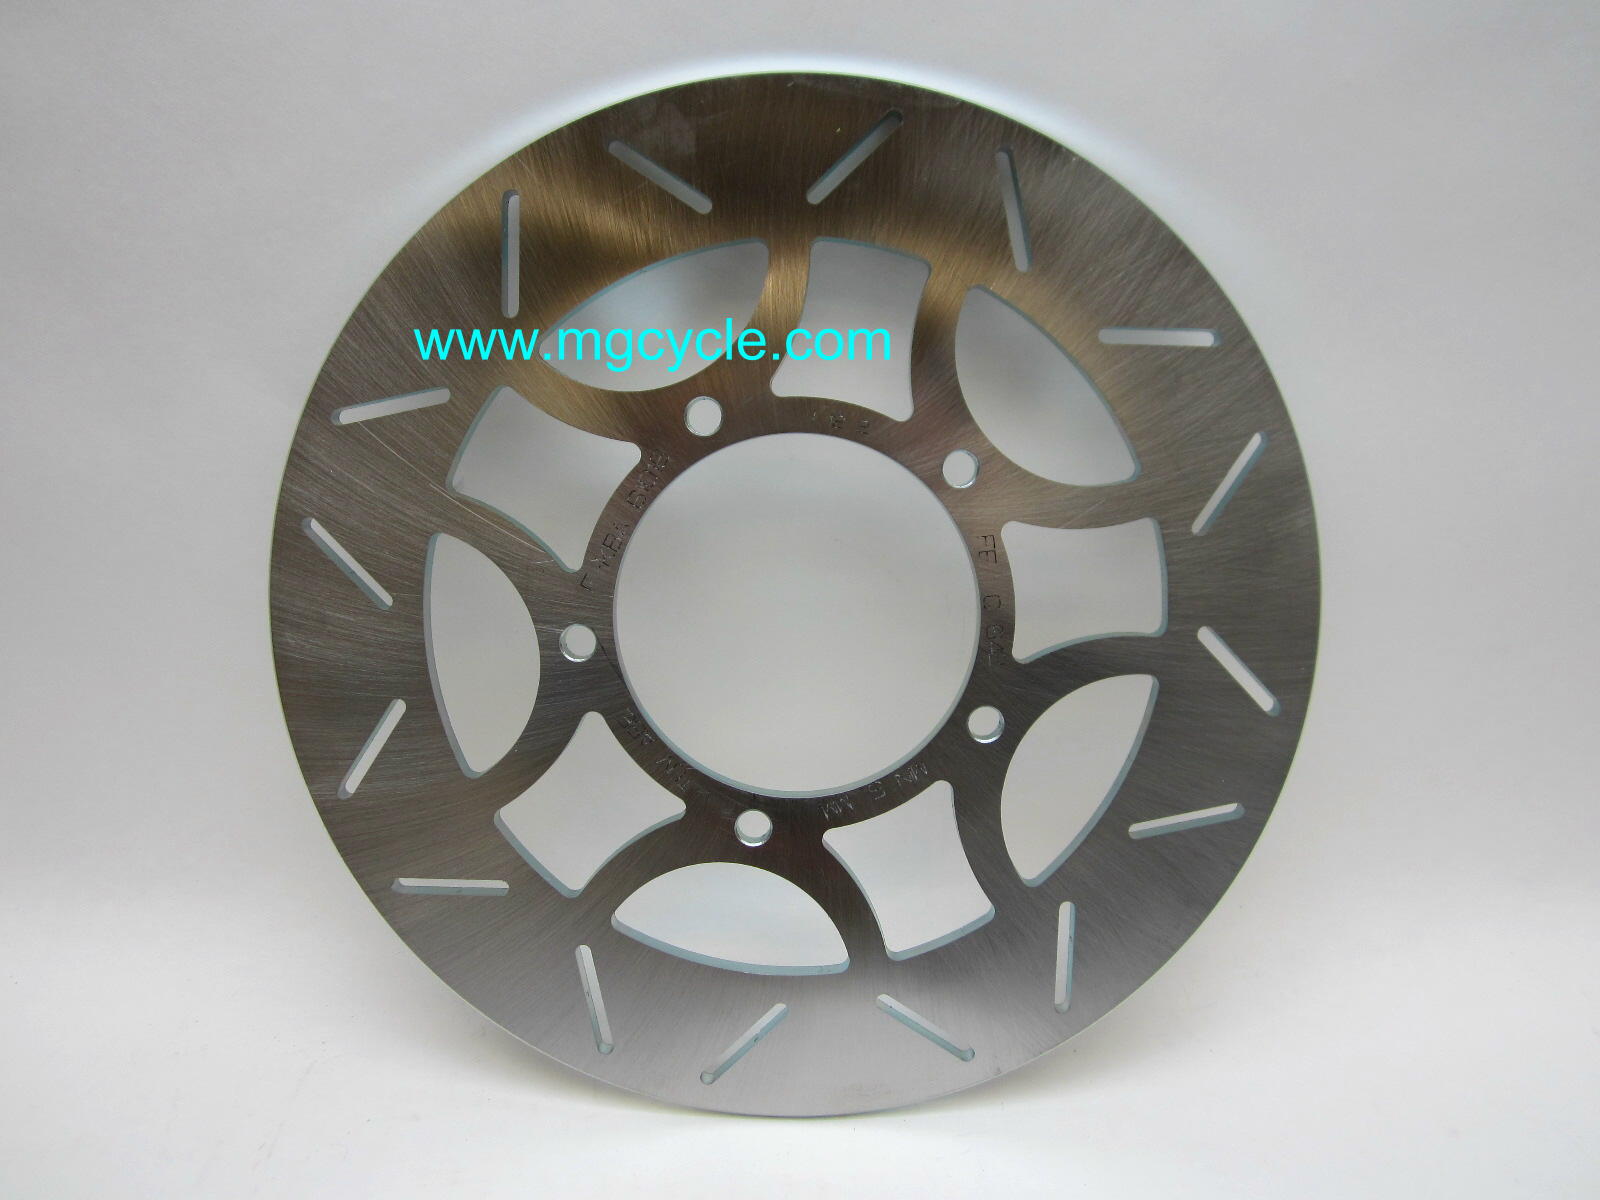 270mm brake disk for 1000 SPII, V65 Lario, some 850T5 - Click Image to Close